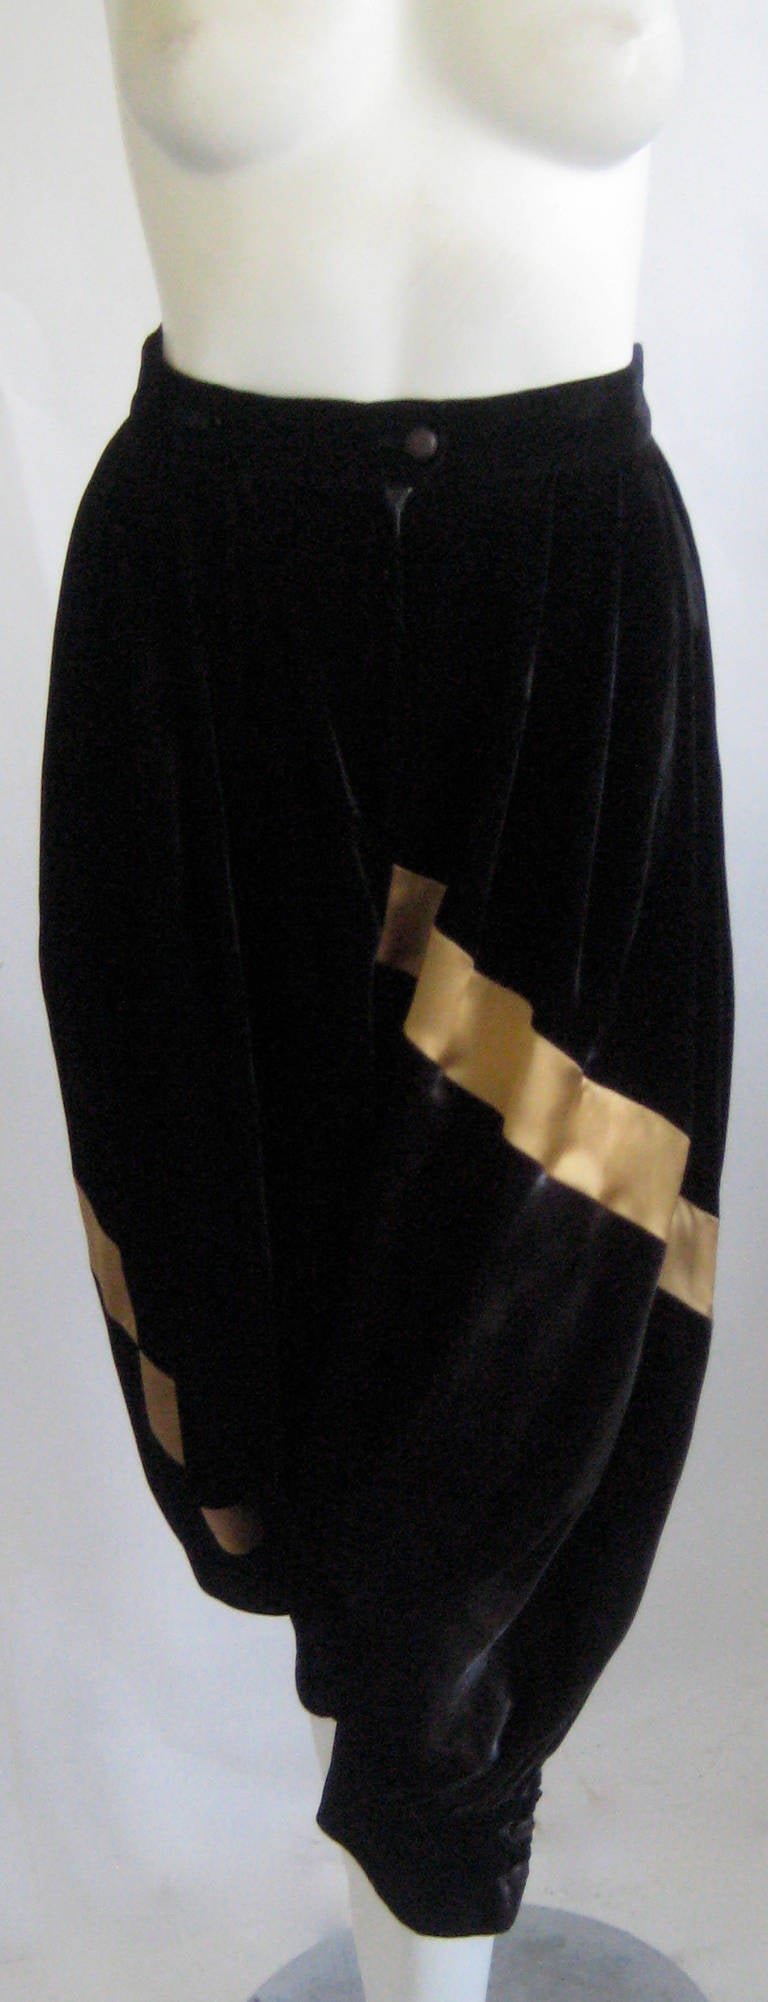 Krizia drop crotch harem pants 
Black rayon velvet banded with gold rayon silk 
High waist
Each cuff has 2 buttons
2 hidden side pockets